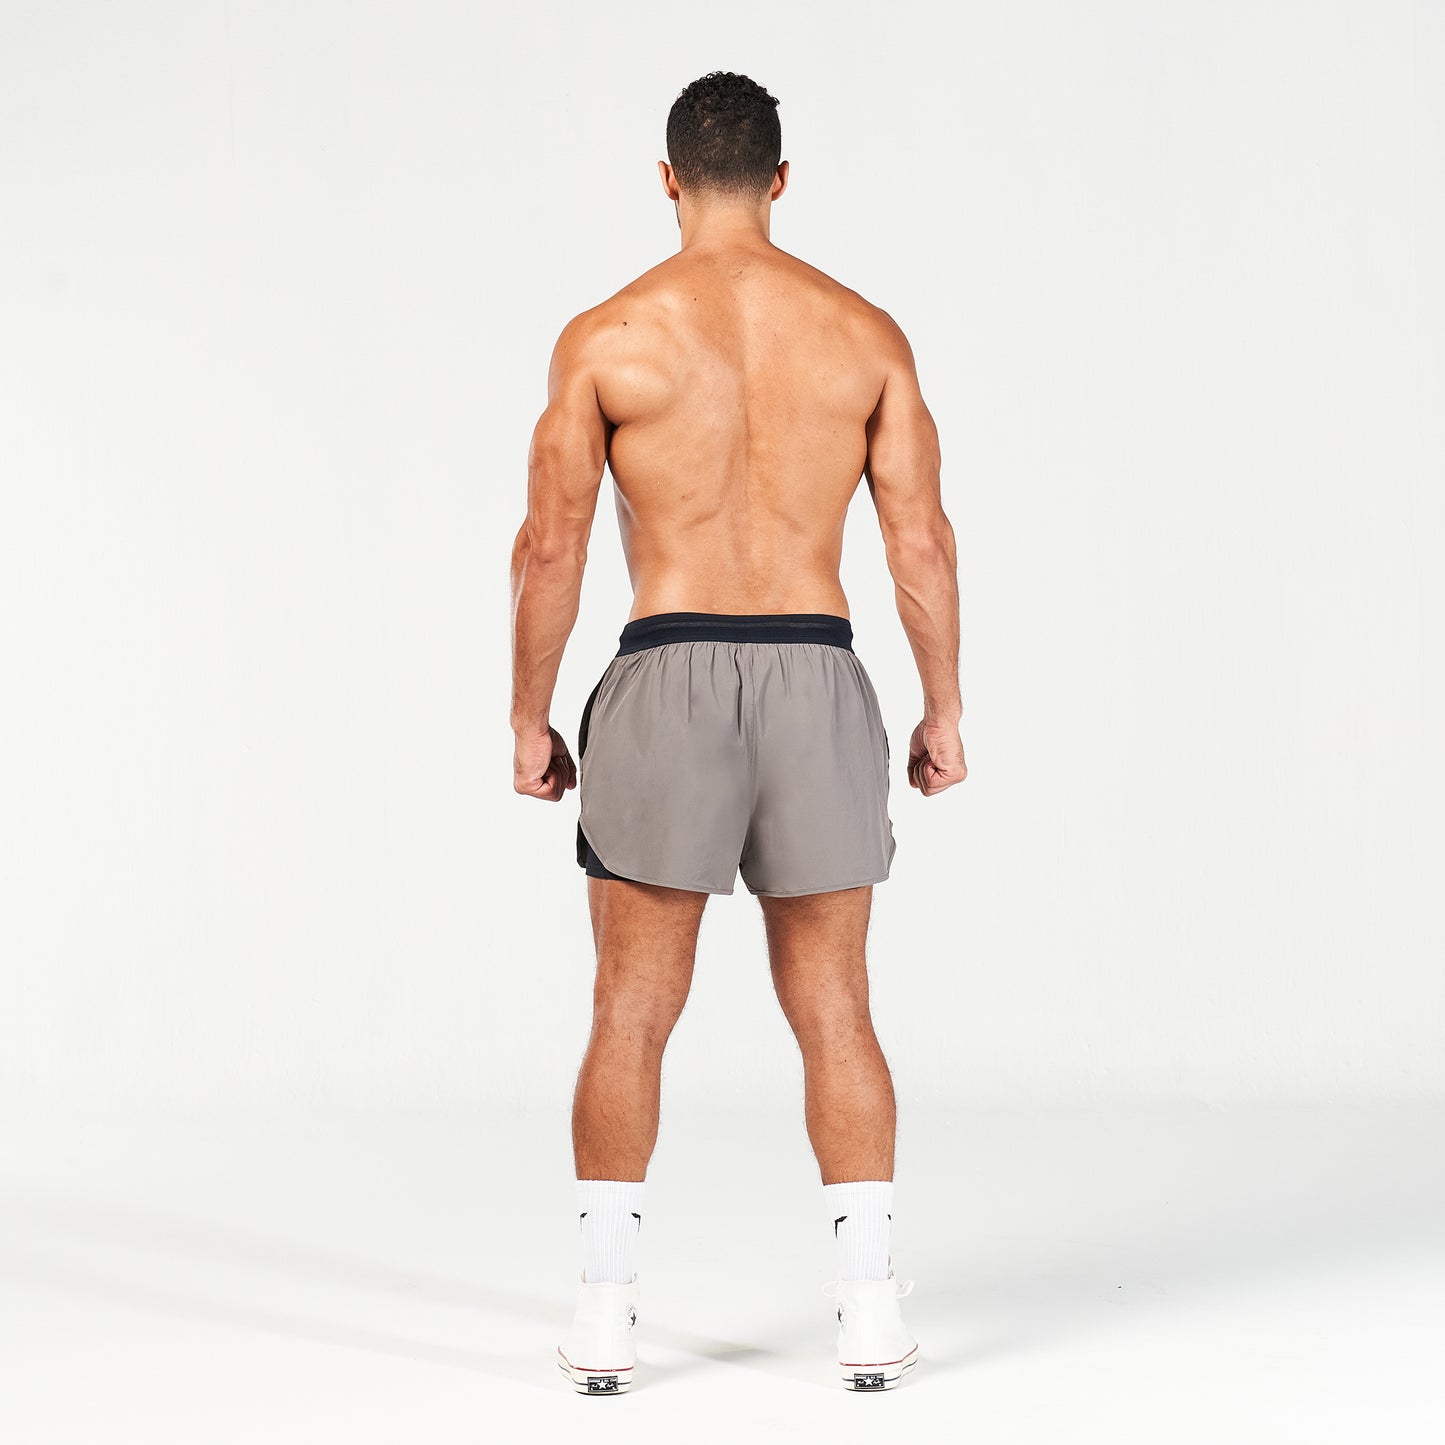 squatwolf-gym-wear-golden-era-young-retro-2-in-1-shorts-dark-gull-grey-workout-short-for-men